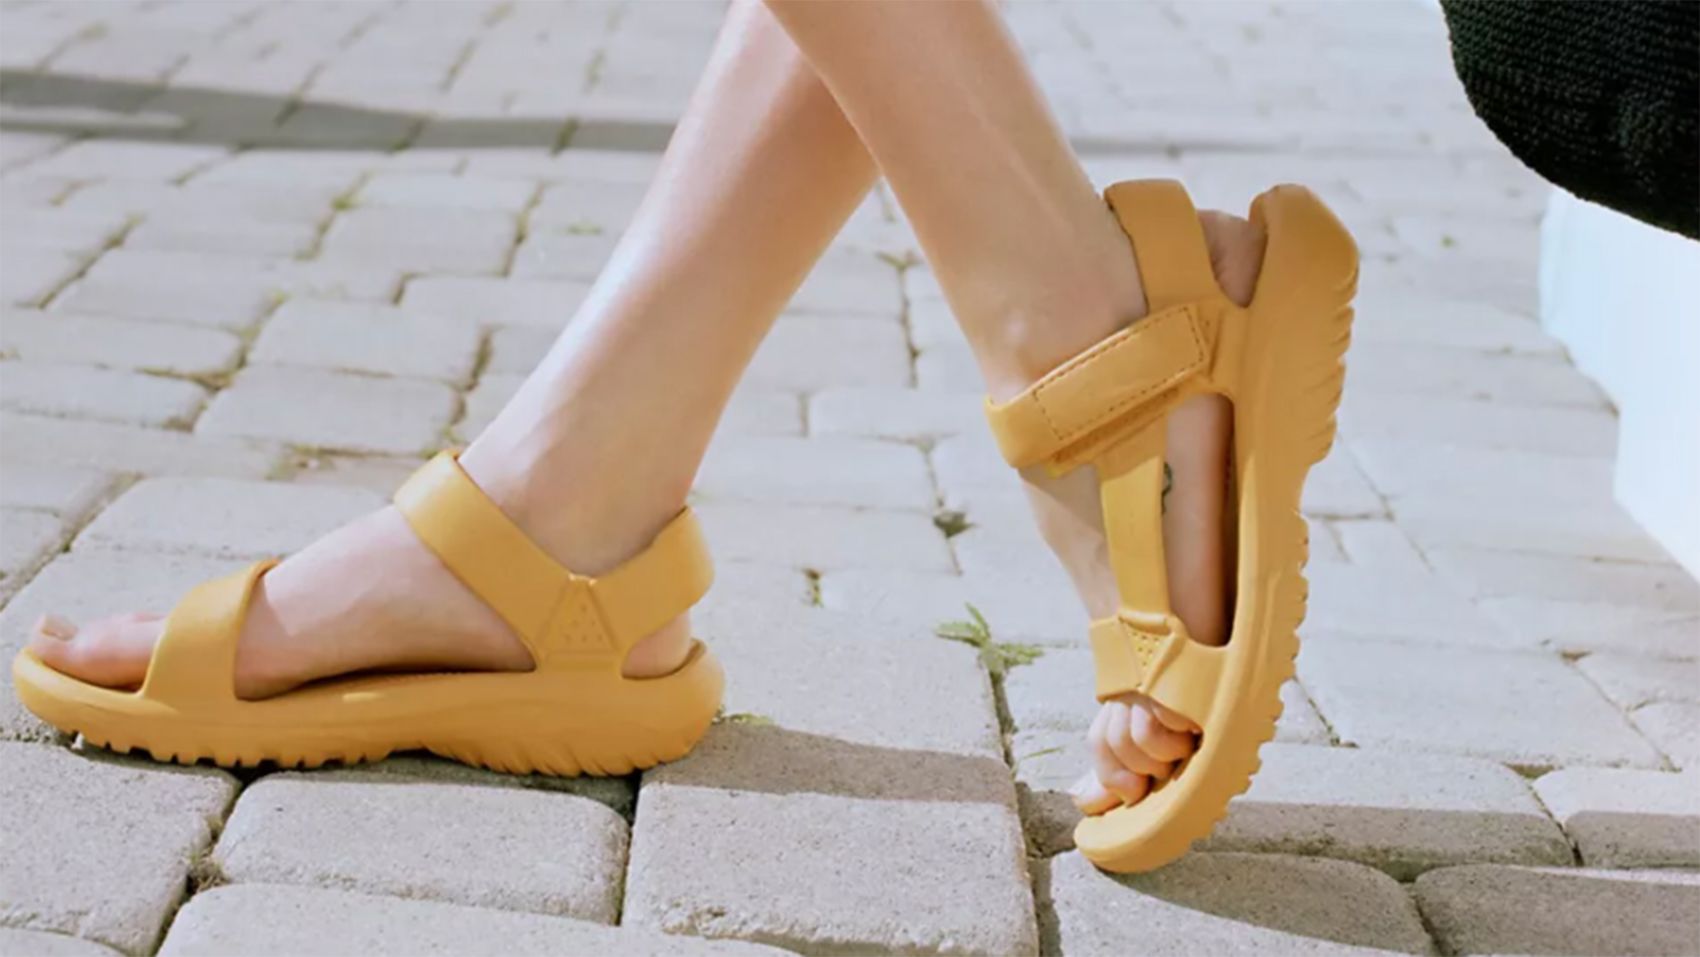 Technologie Downtown Smaak Tevas sandals that fashion editors love | CNN Underscored